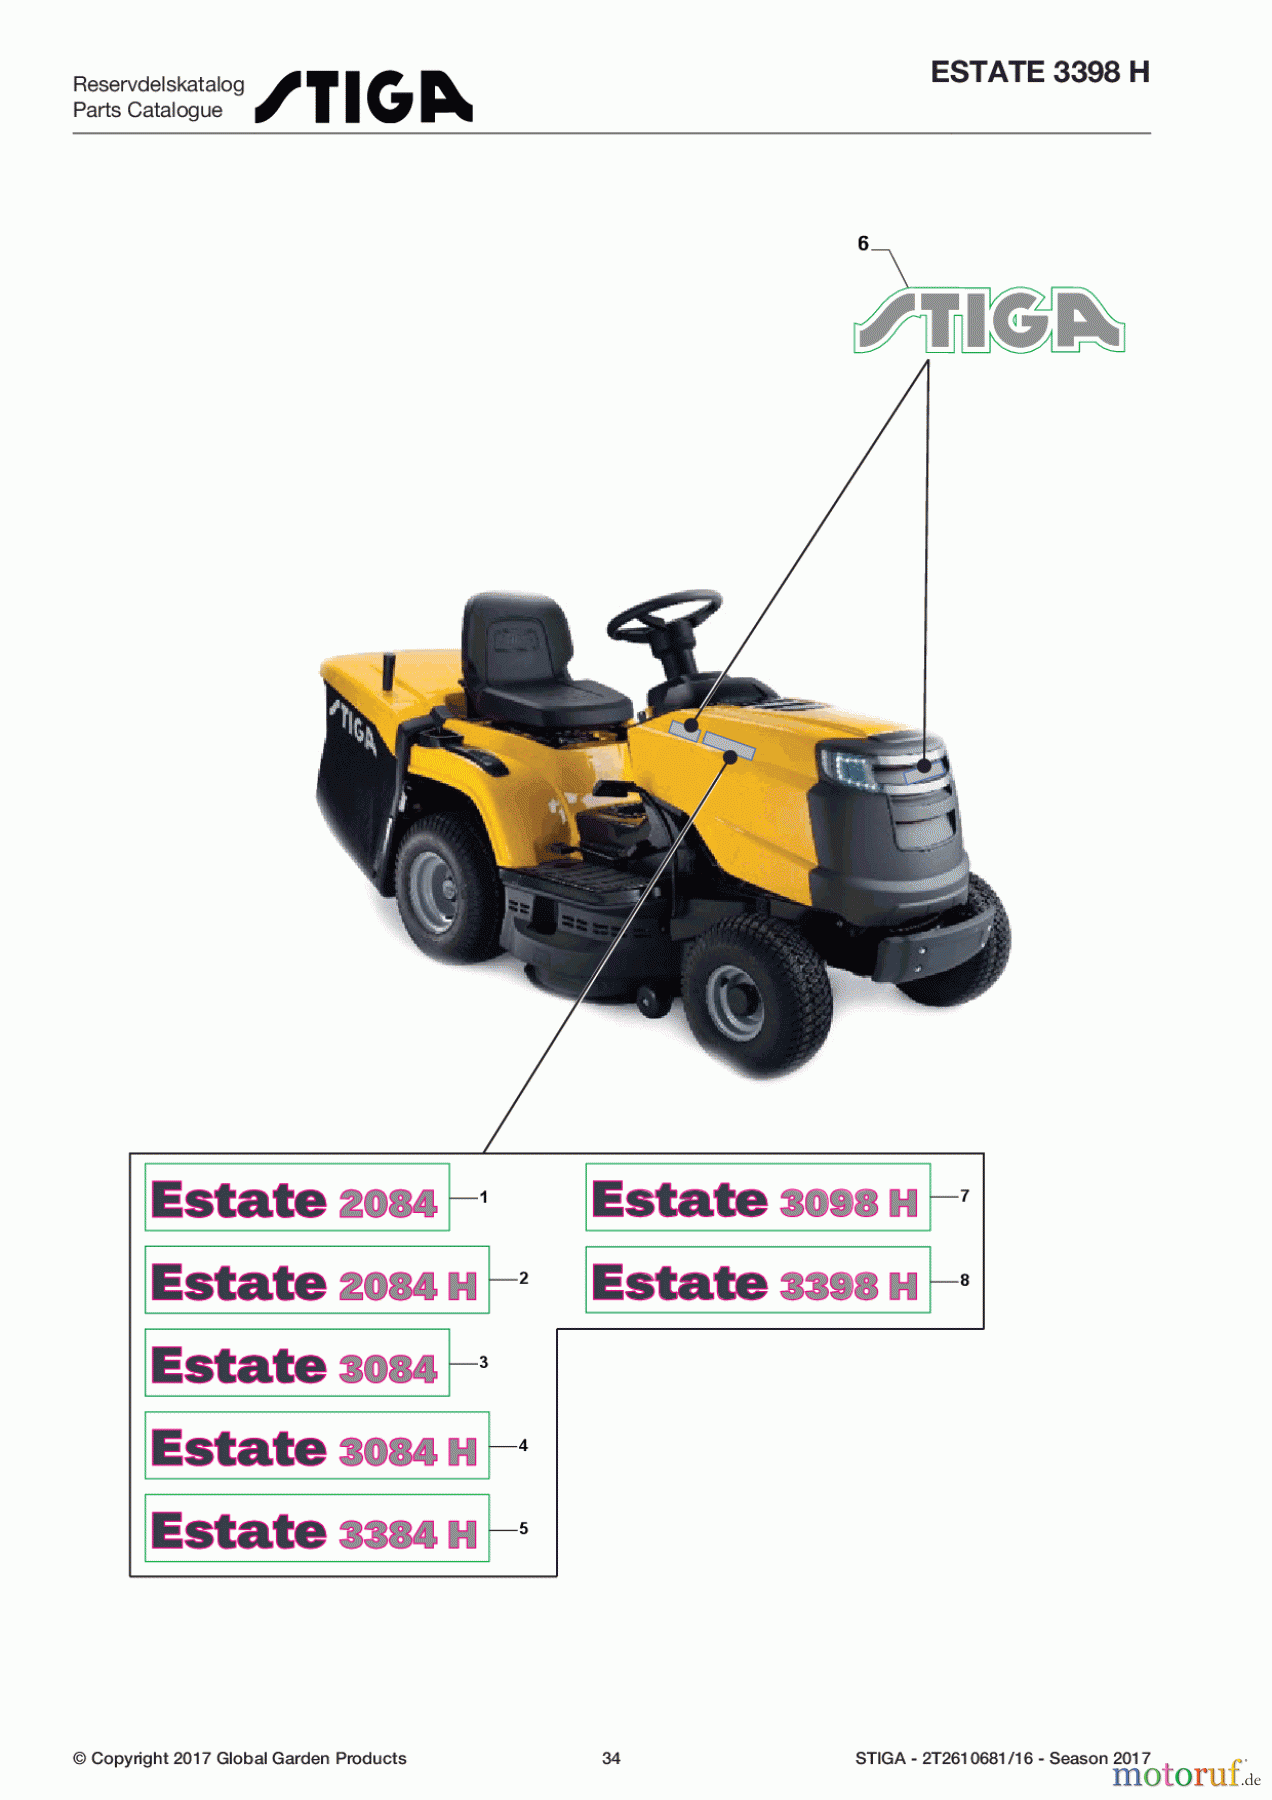  Stiga Rasentraktoren Estate, Tornado tractors 98 cm Sammelfunktion Baujahr 2017 ESTATE 3398 H 2T2610681/16 - Season 2017 Labels